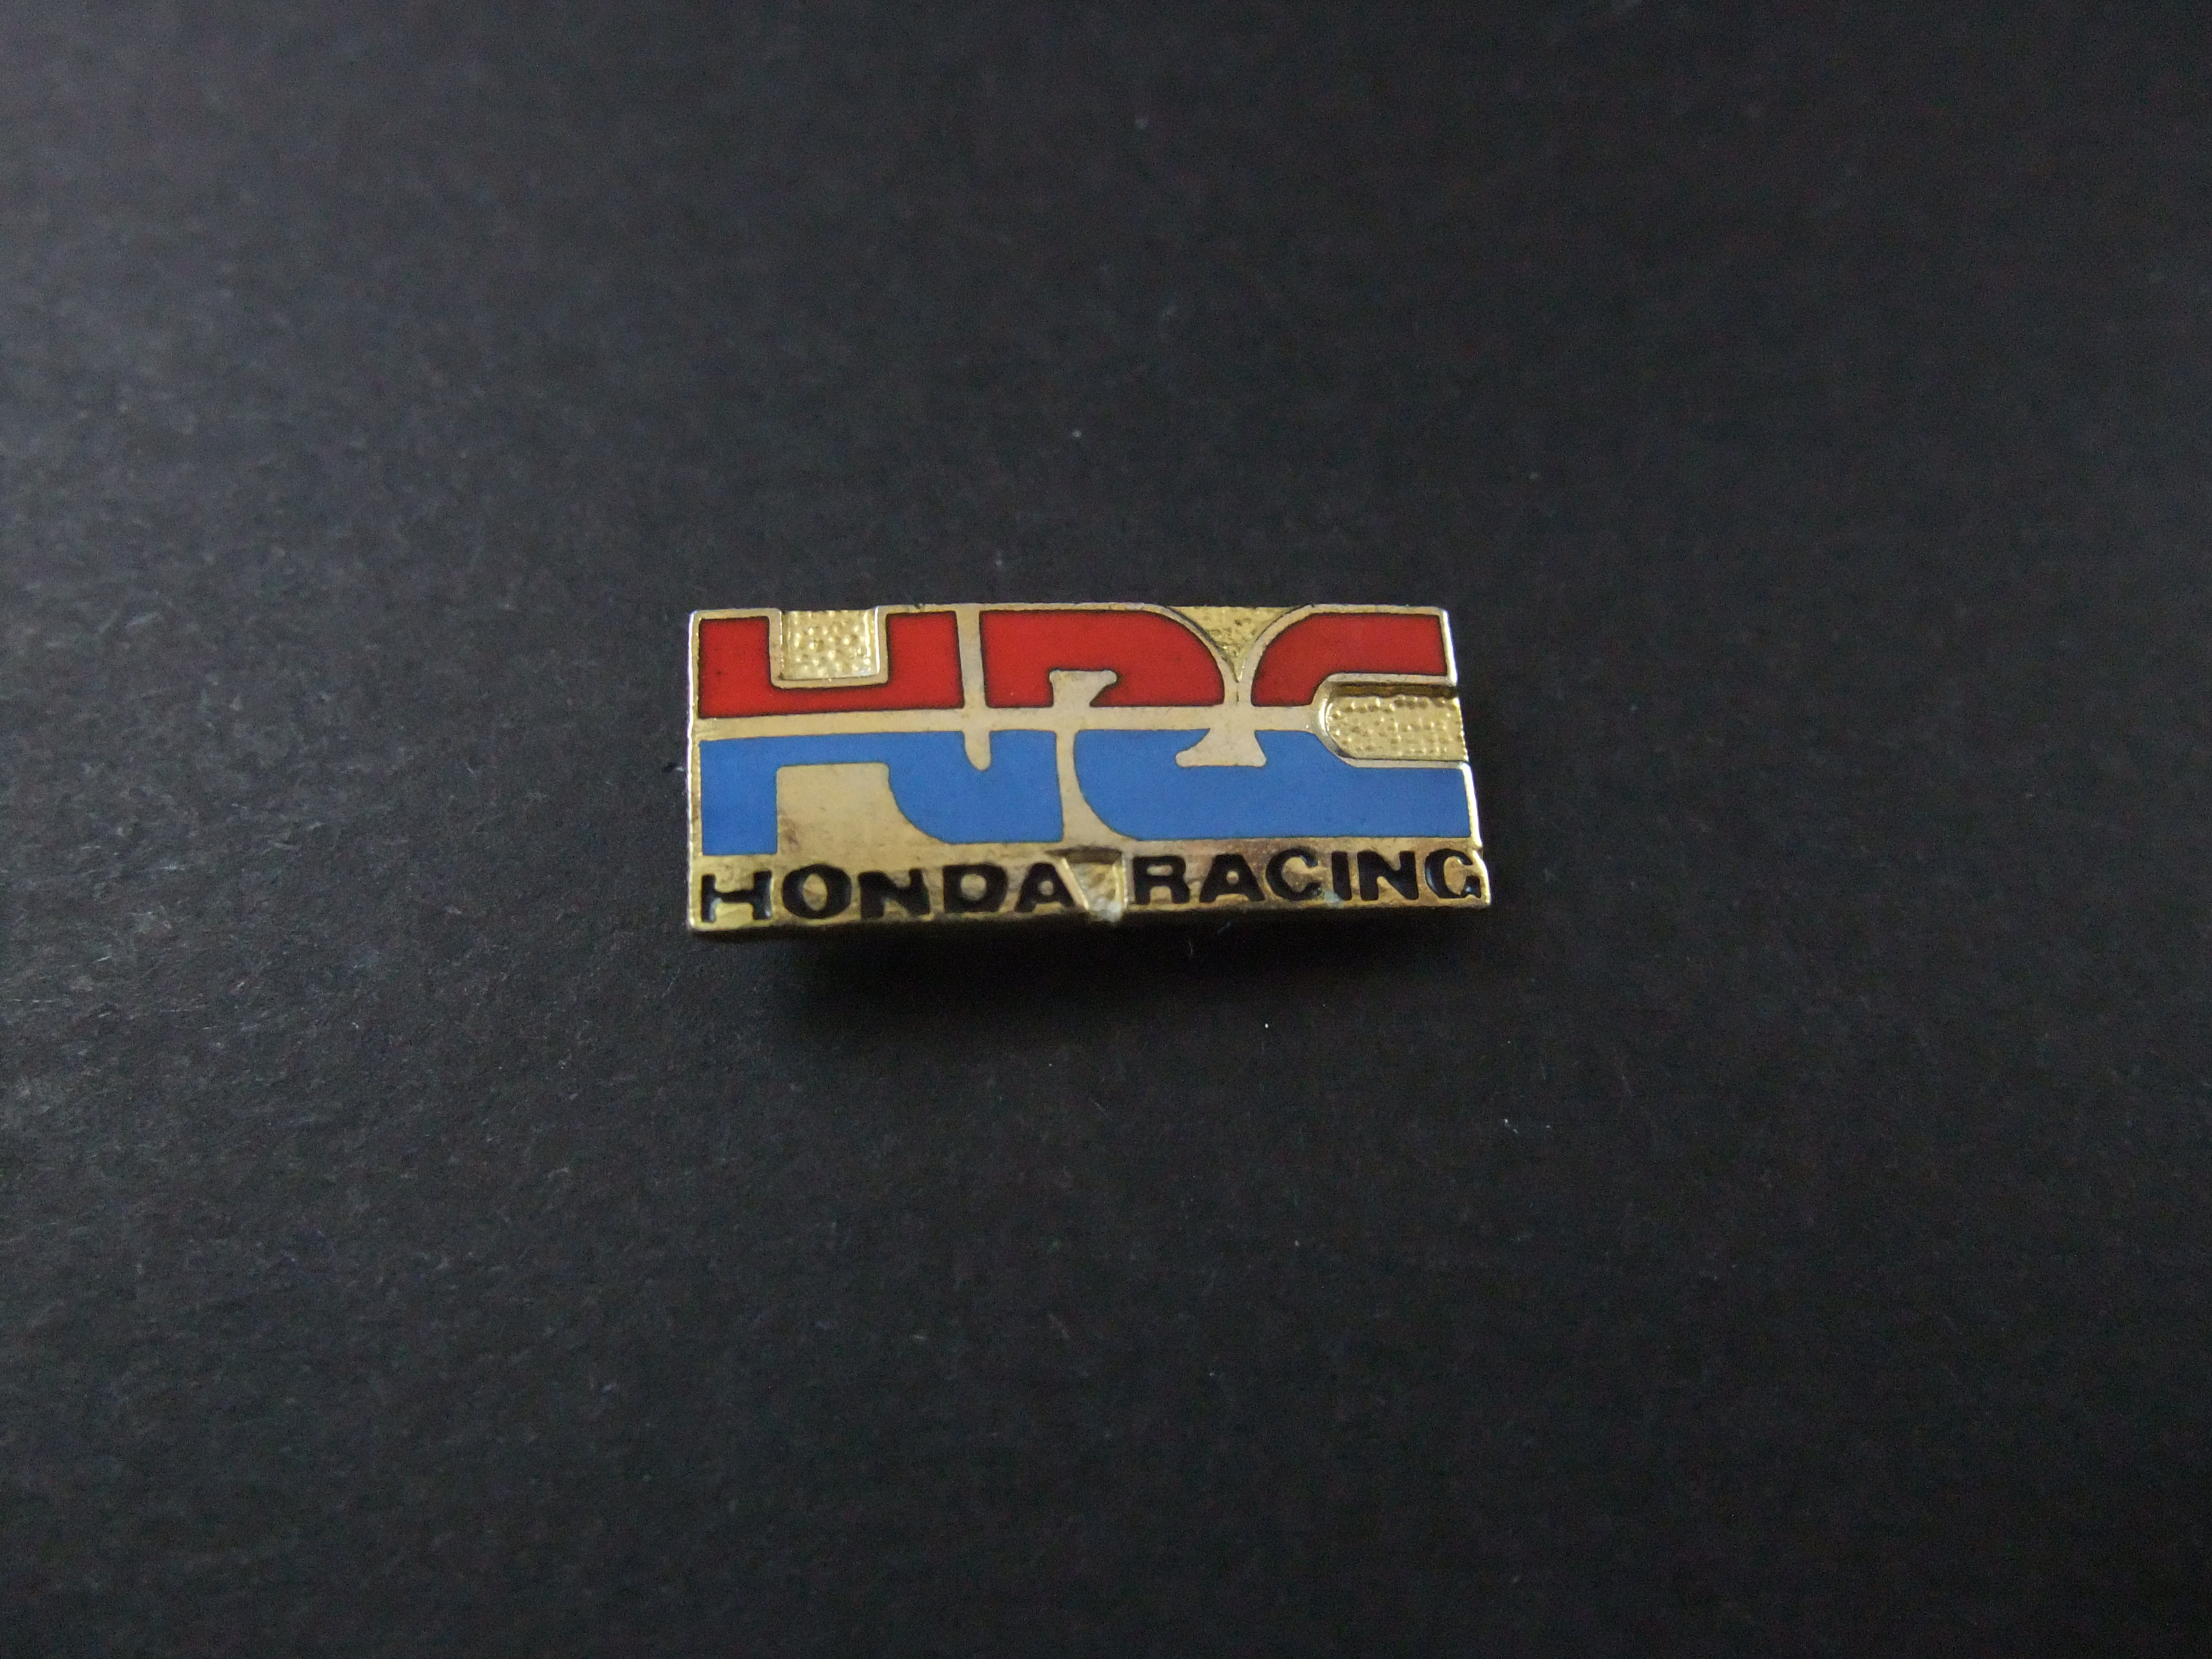 Honda.Racing (motorsportdivisie) logo